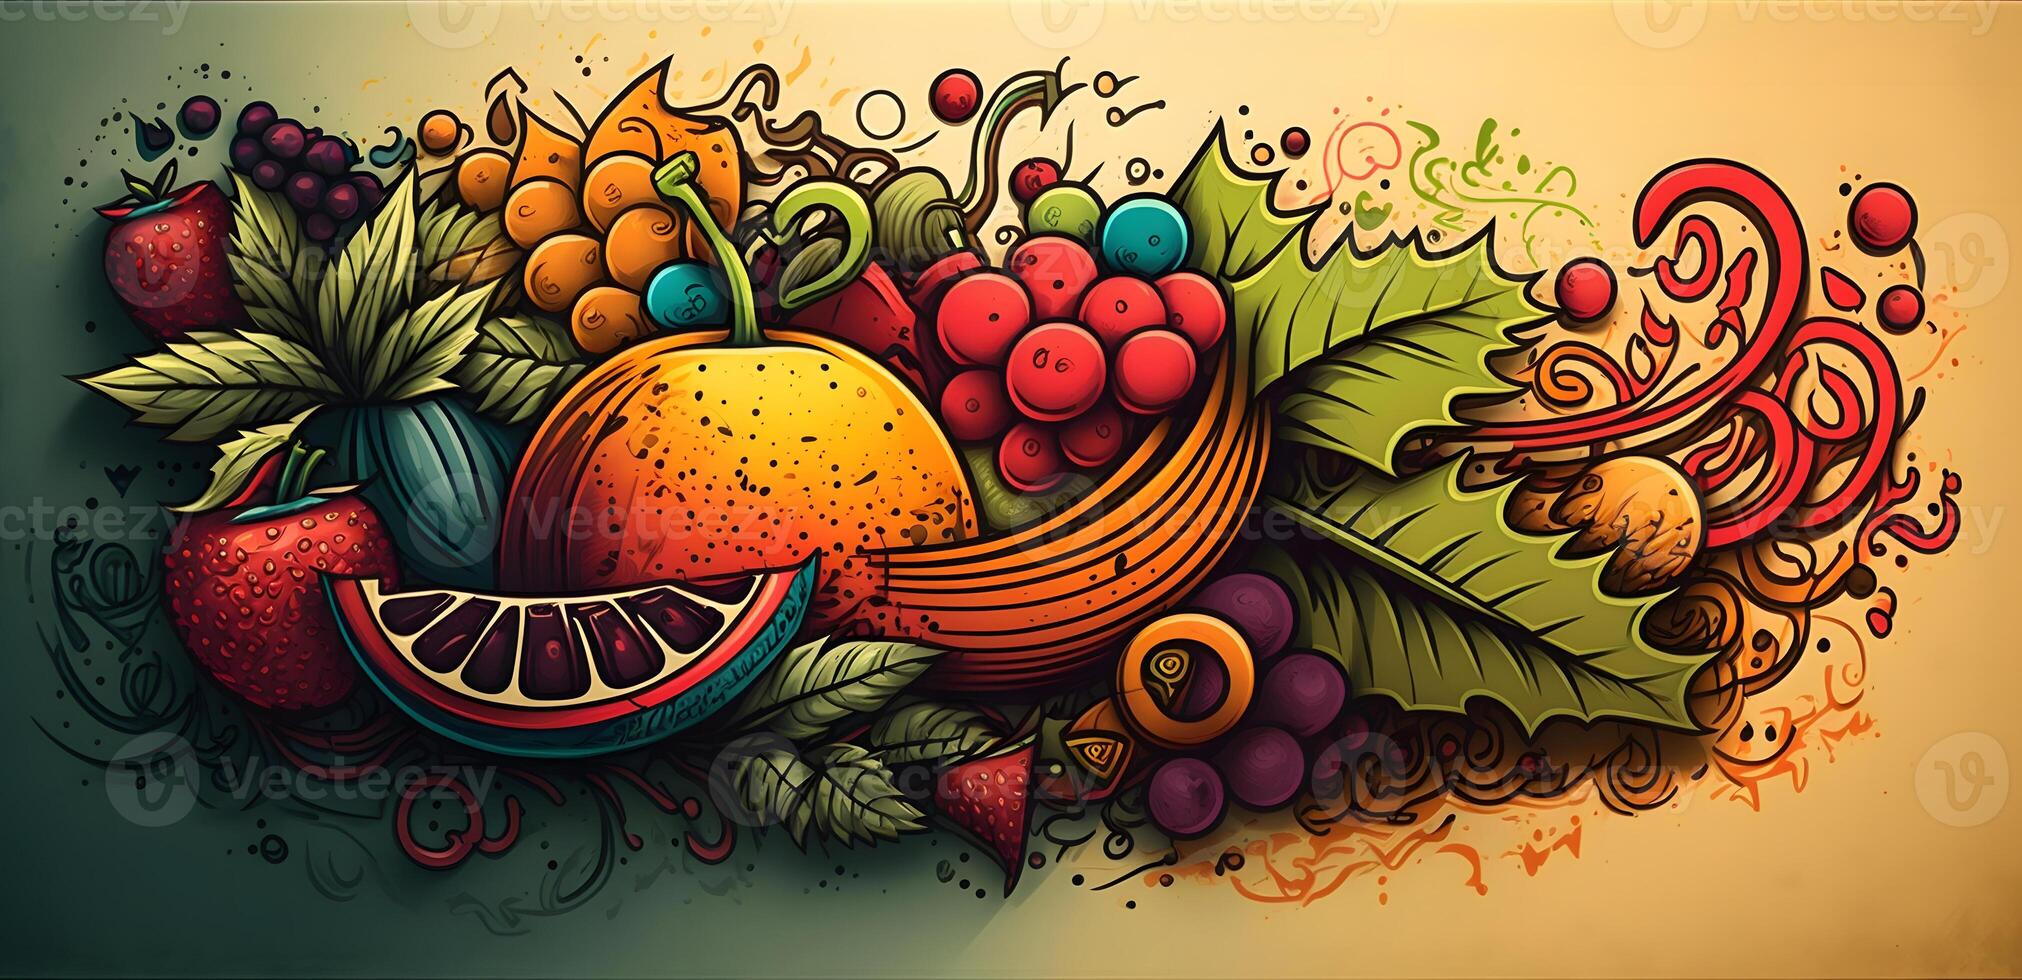 Fruits Graffiti Wallpaper, Mix Fruit Doodle with street art style , photo